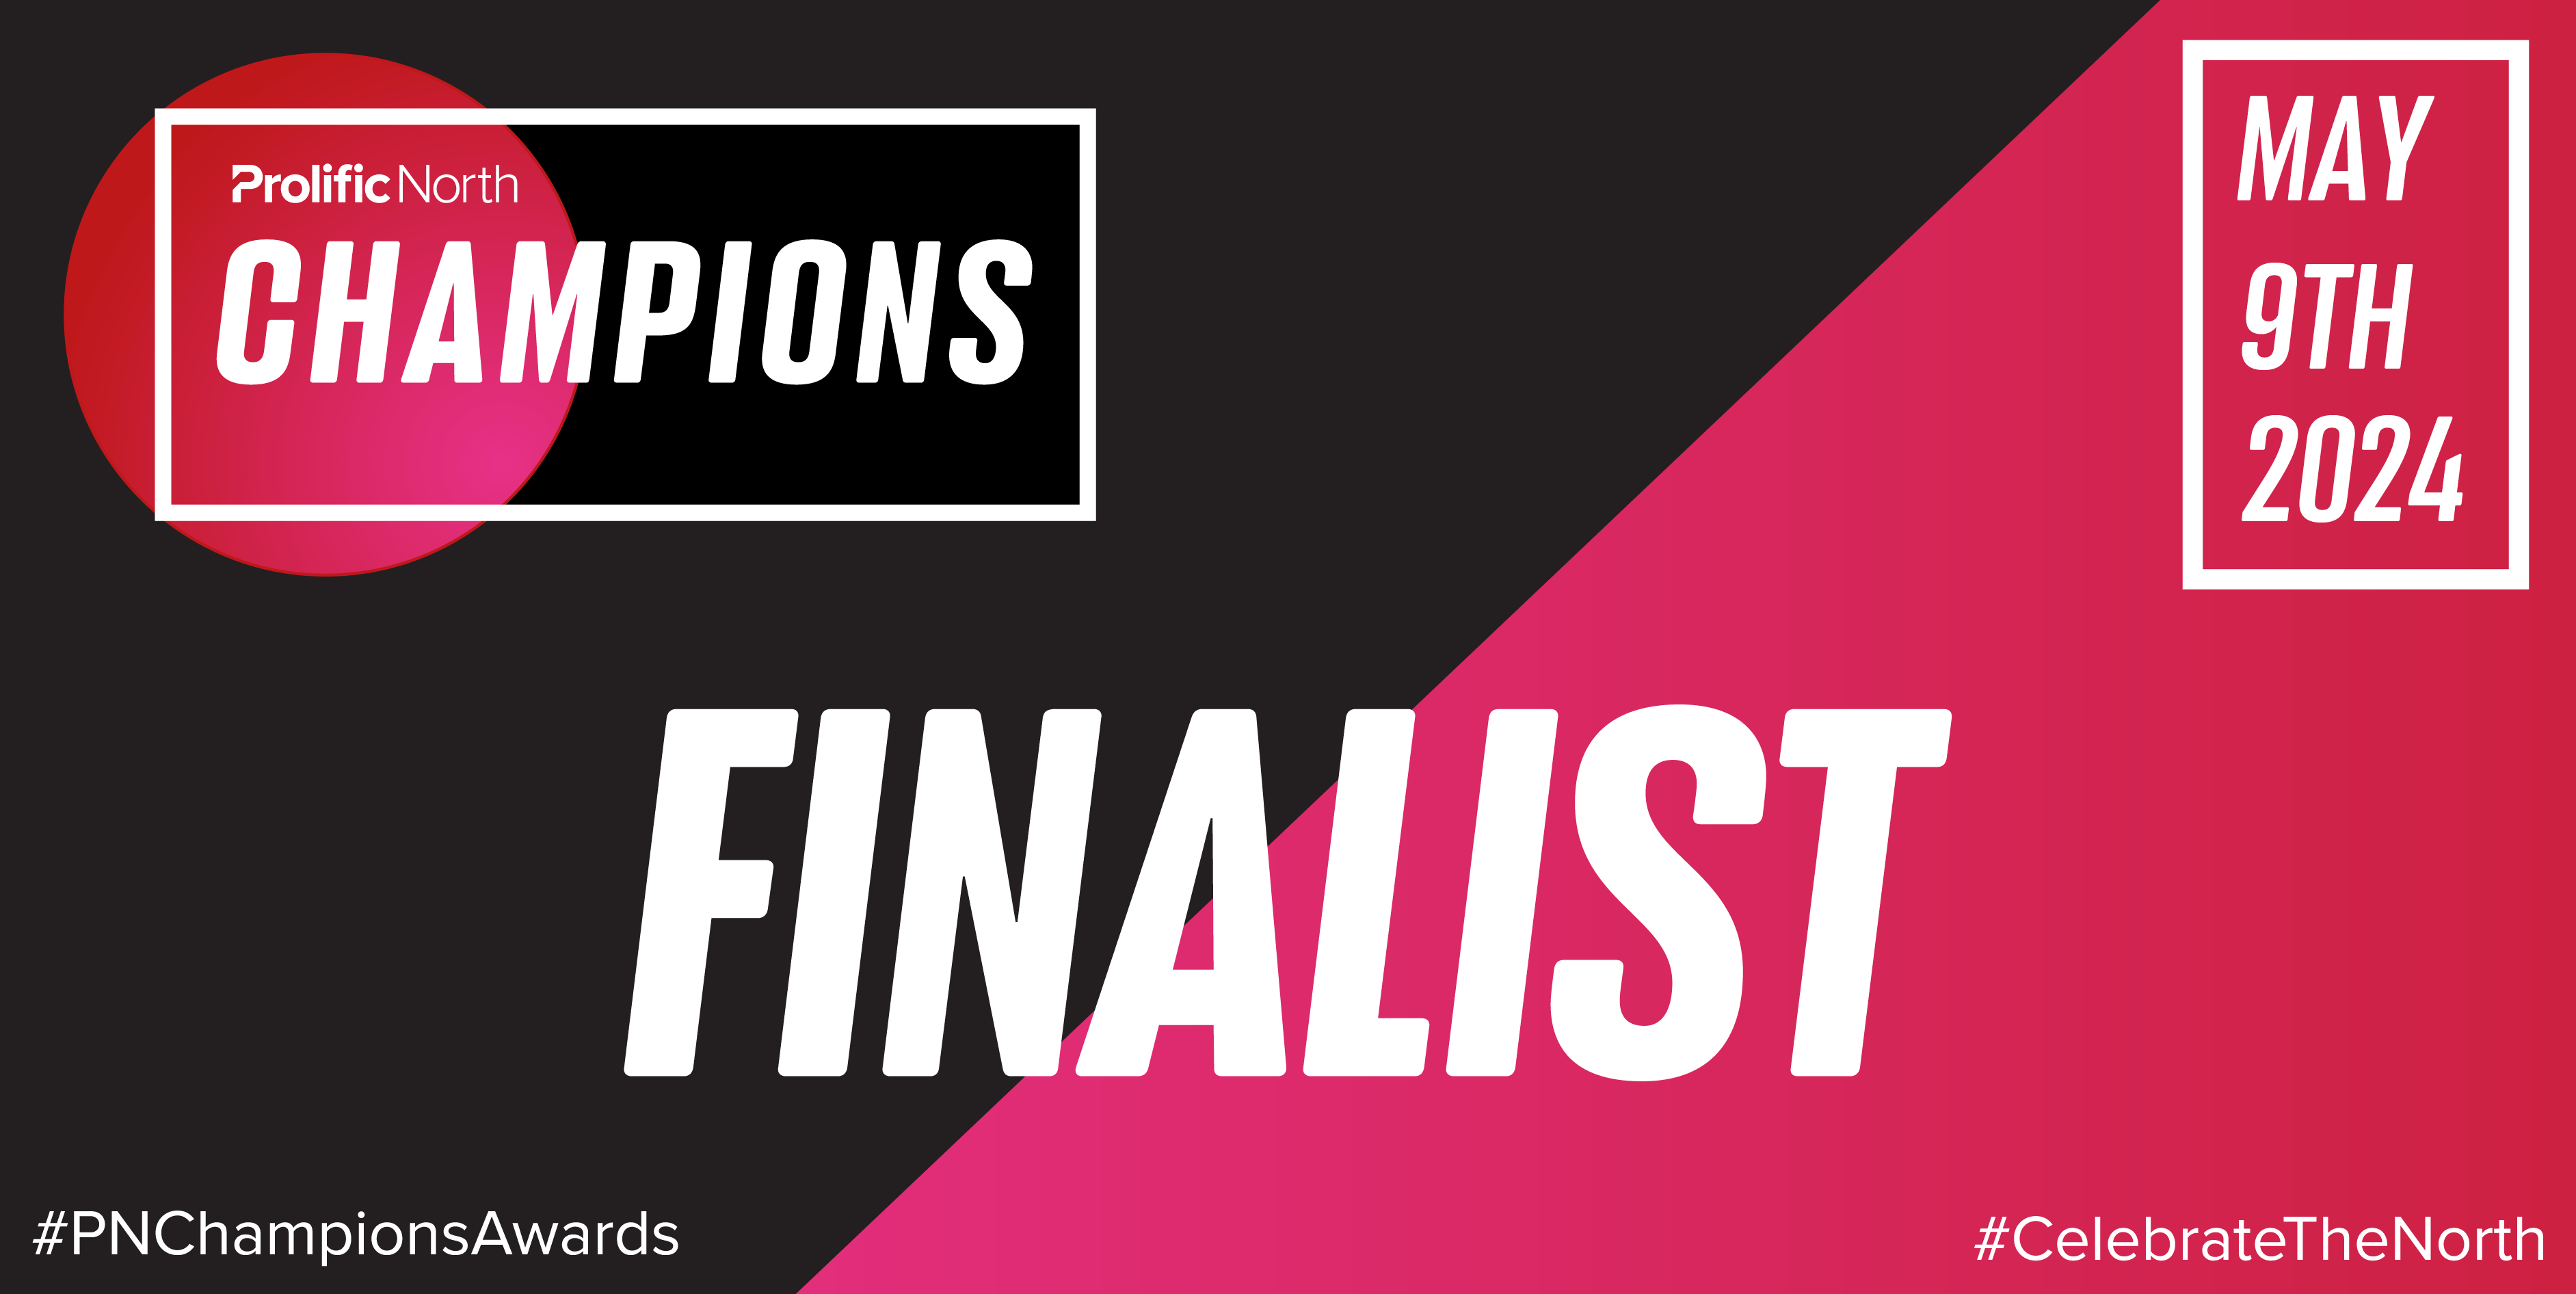 Prolific North Champions Awards Finalist